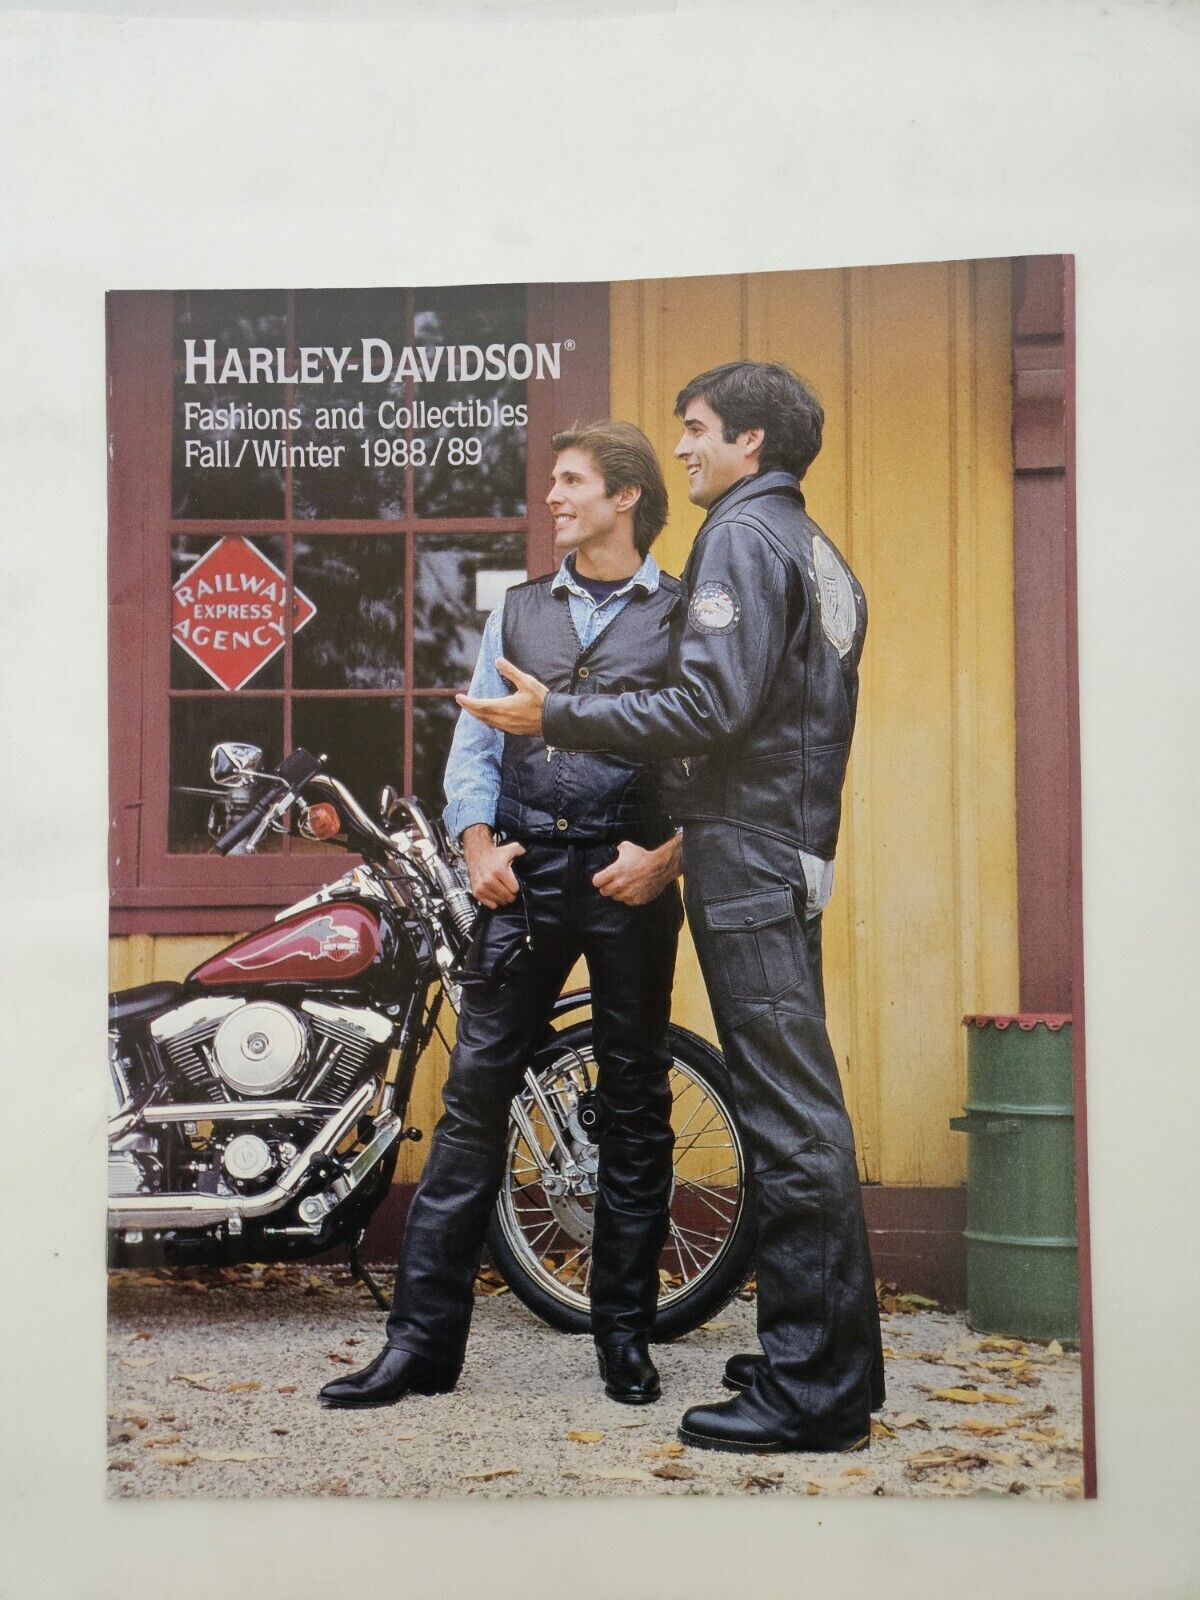 Original 1988 1989 Harley Davidson Motorcycle Fashions & Collectibles Brochure 